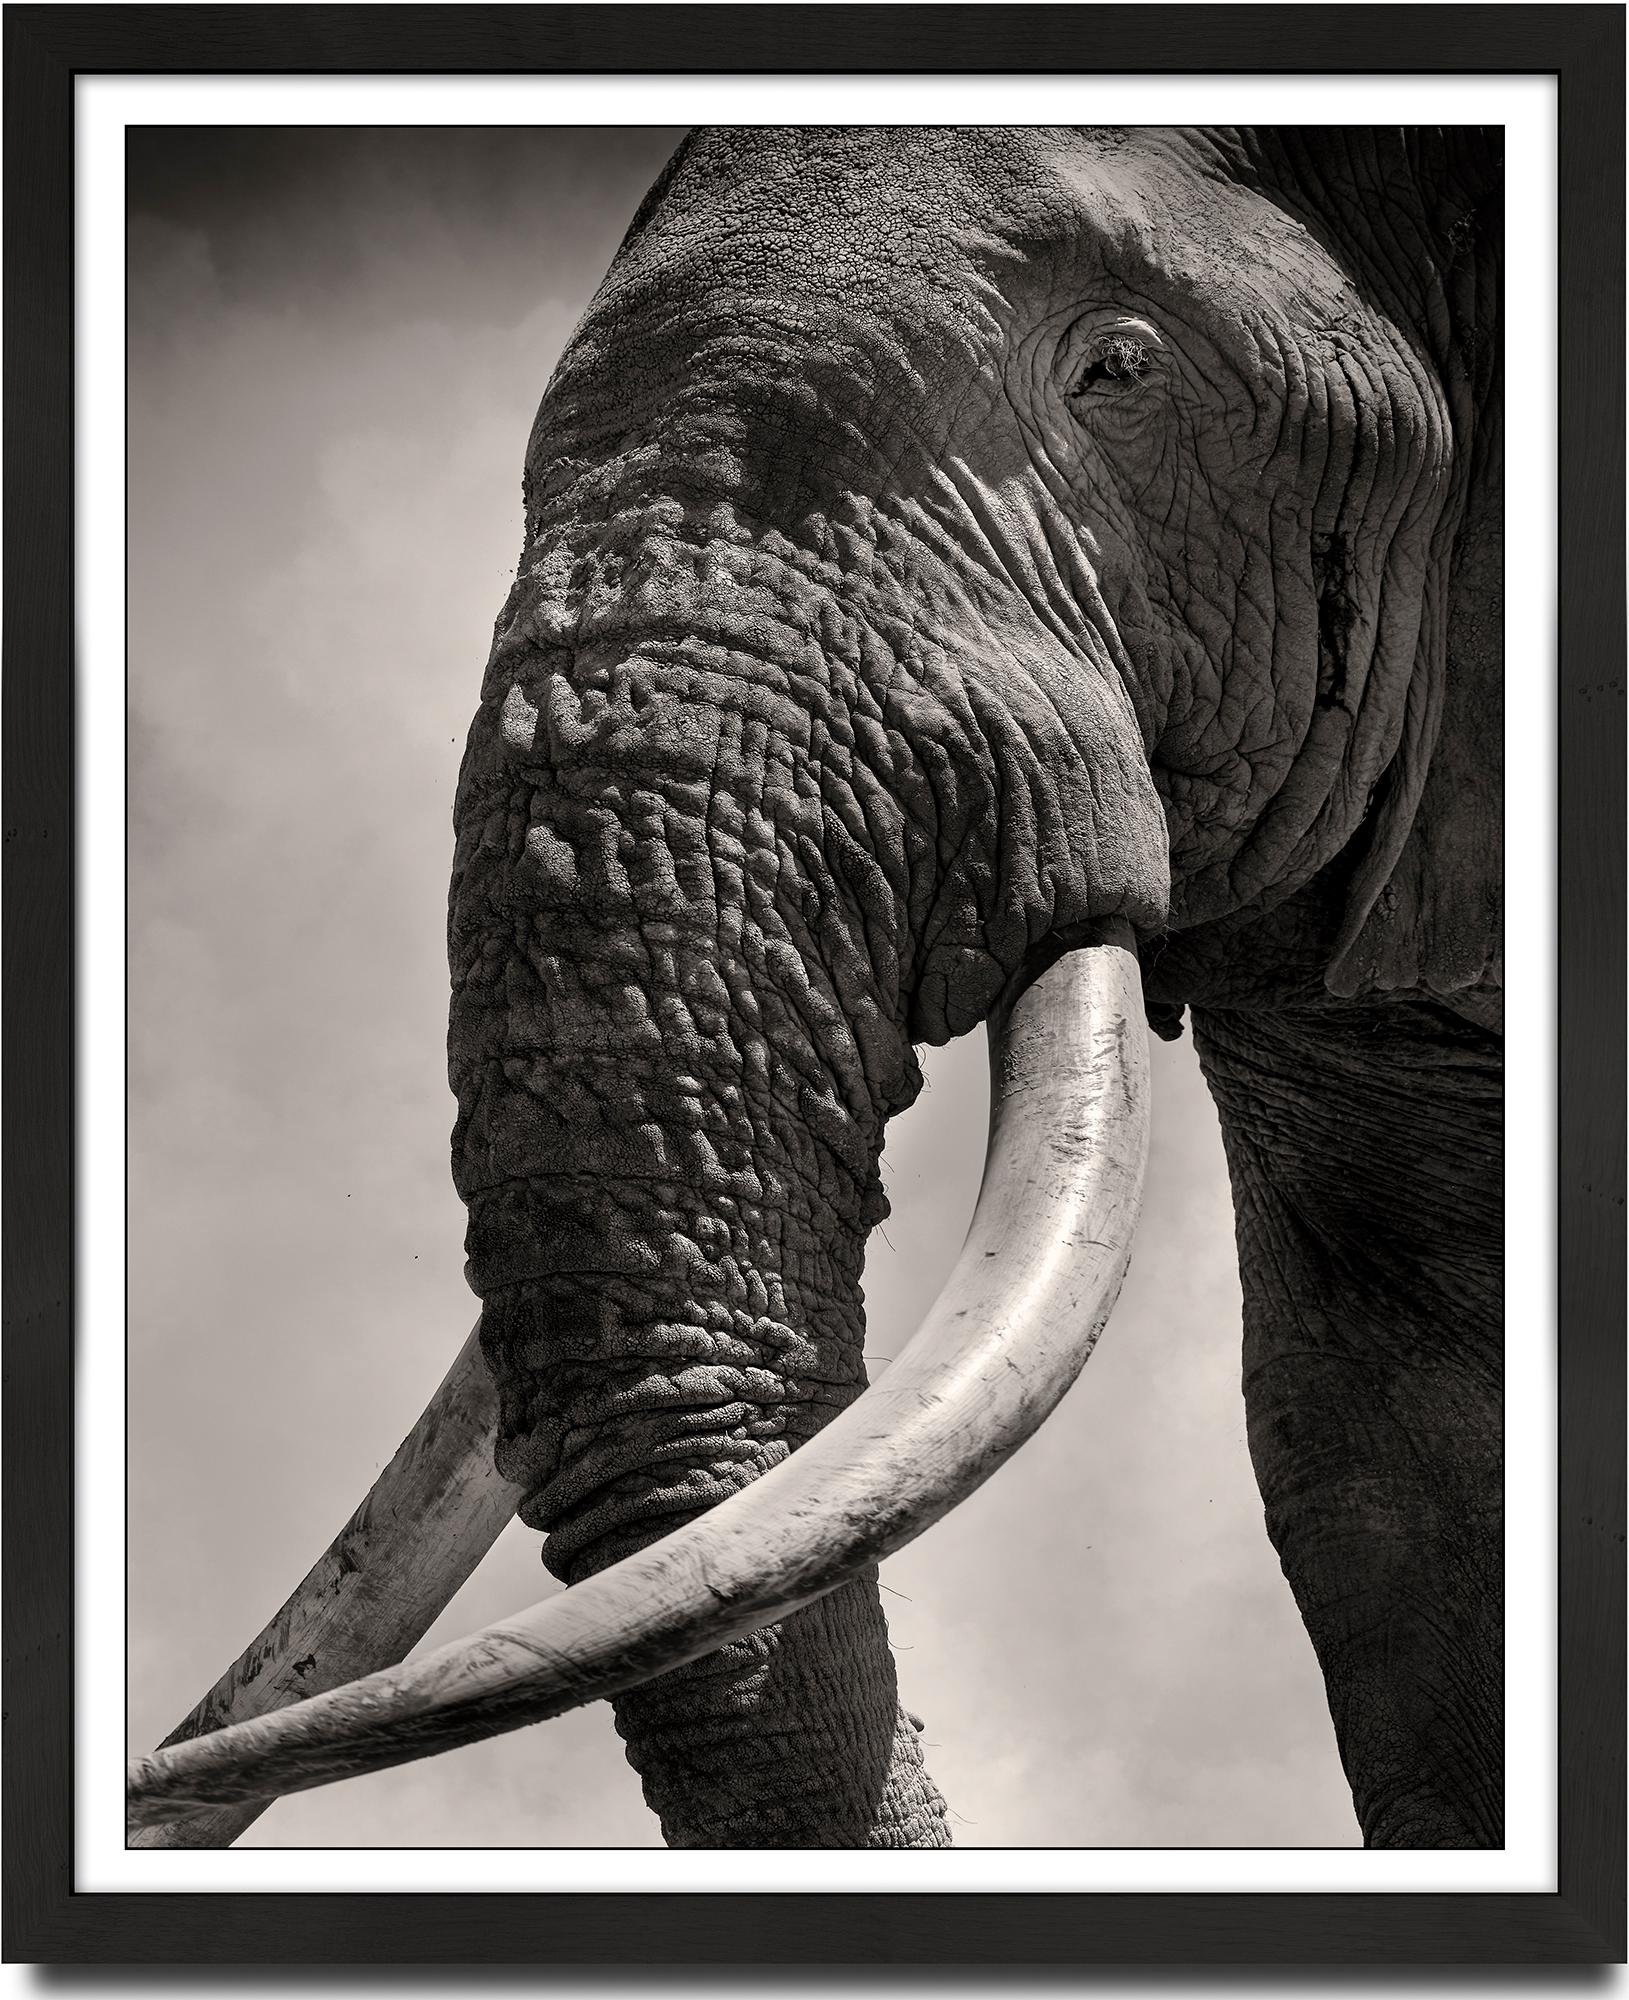 Tim Eye to Eye, Kenya, Elephant, b&w photography - Photograph by Joachim Schmeisser